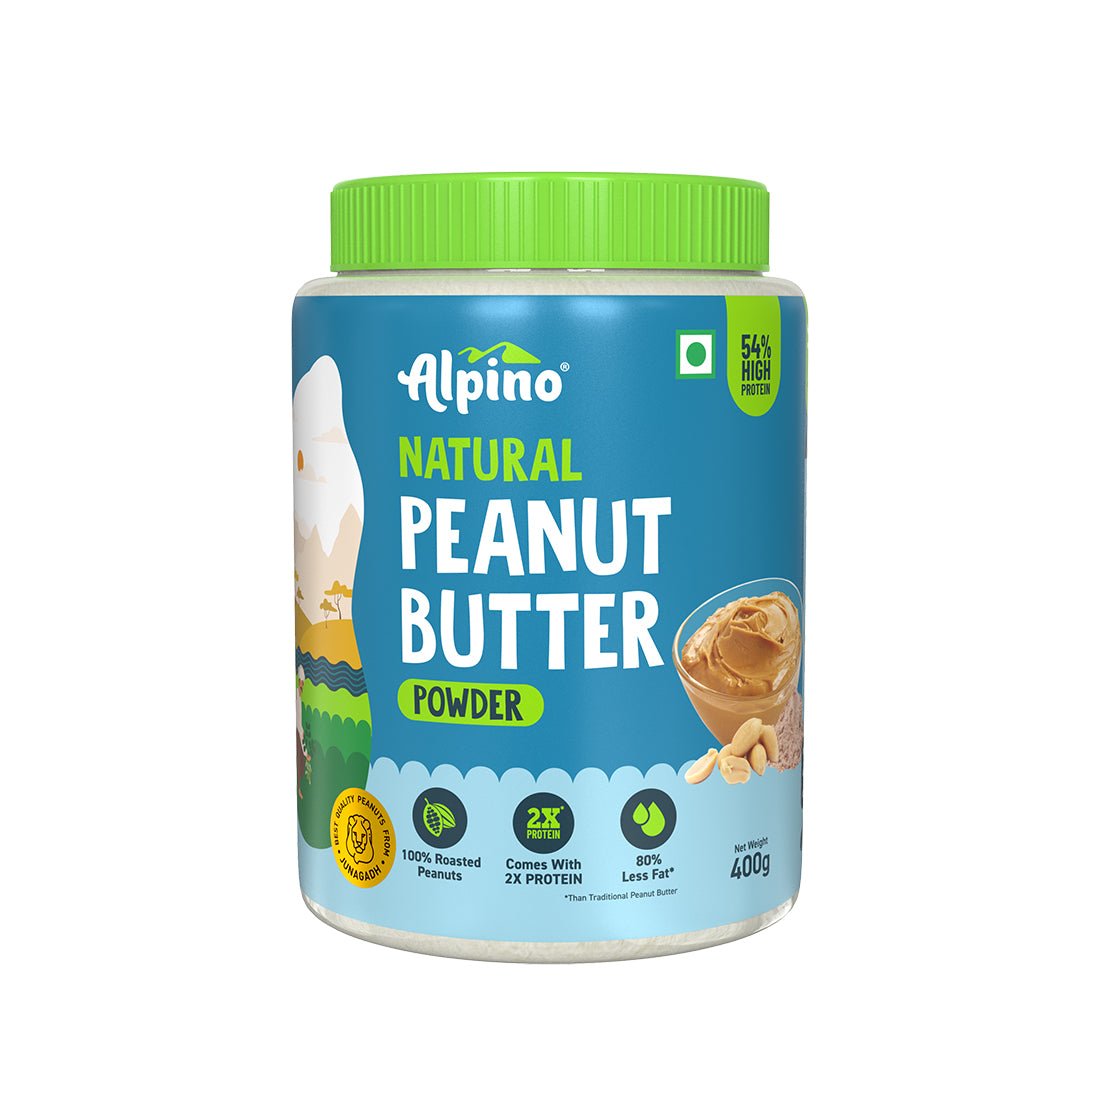 Alpino Natural Peanut Butter Powder (400g) - Kreate- Spreads